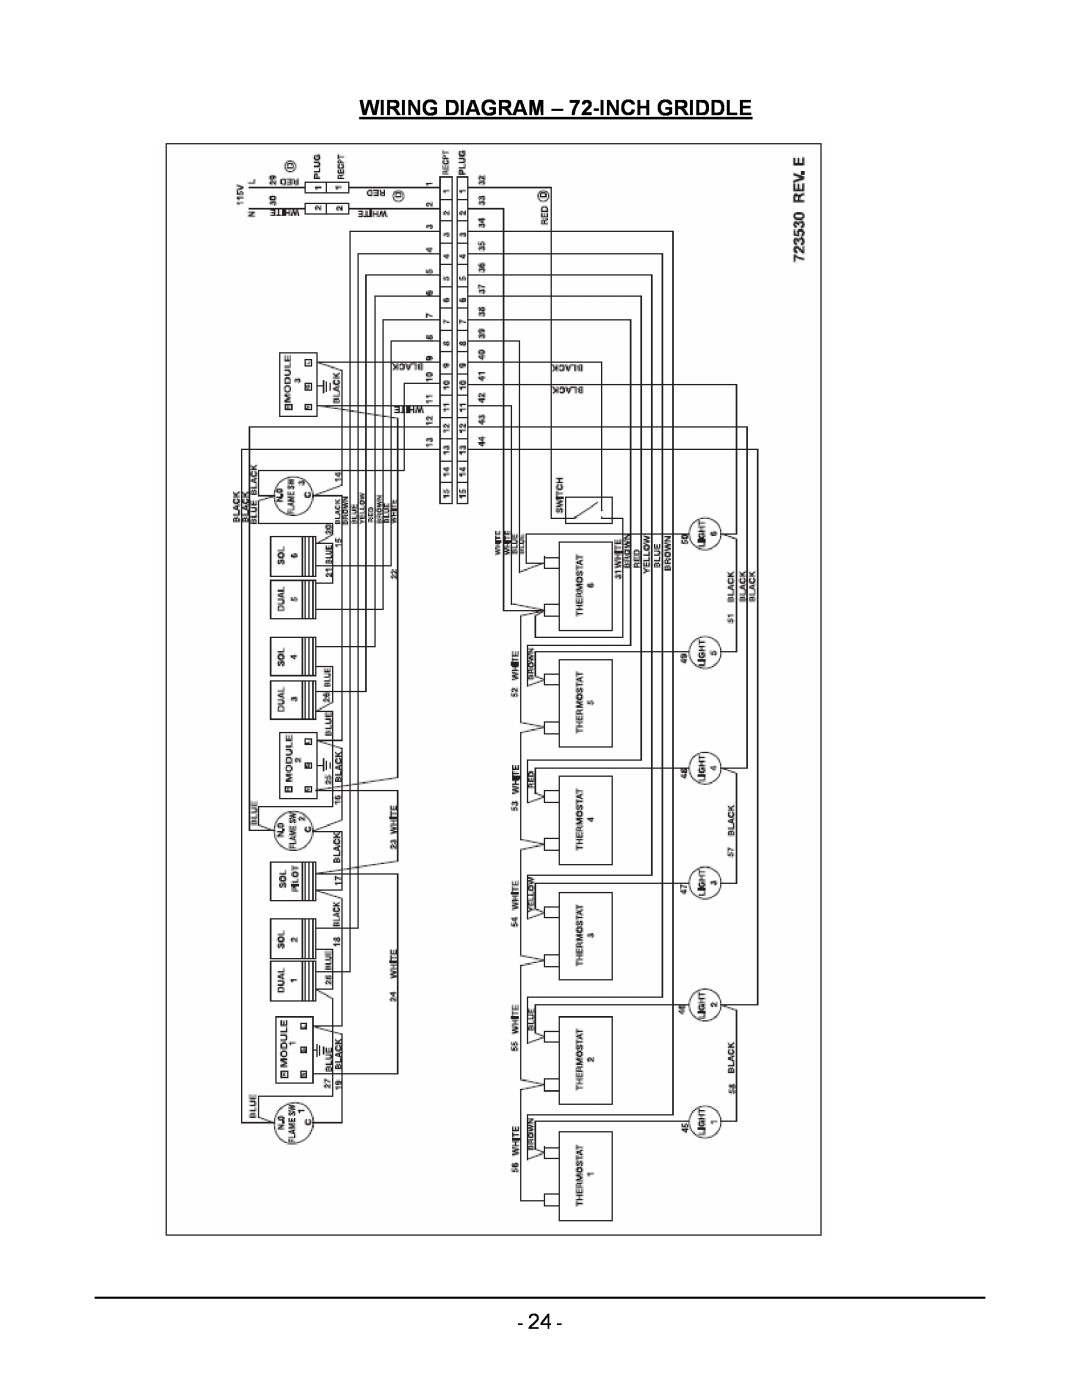 Vulcan-Hart ML-136221-00G24 manual WIRING DIAGRAM - 72-INCH GRIDDLE 